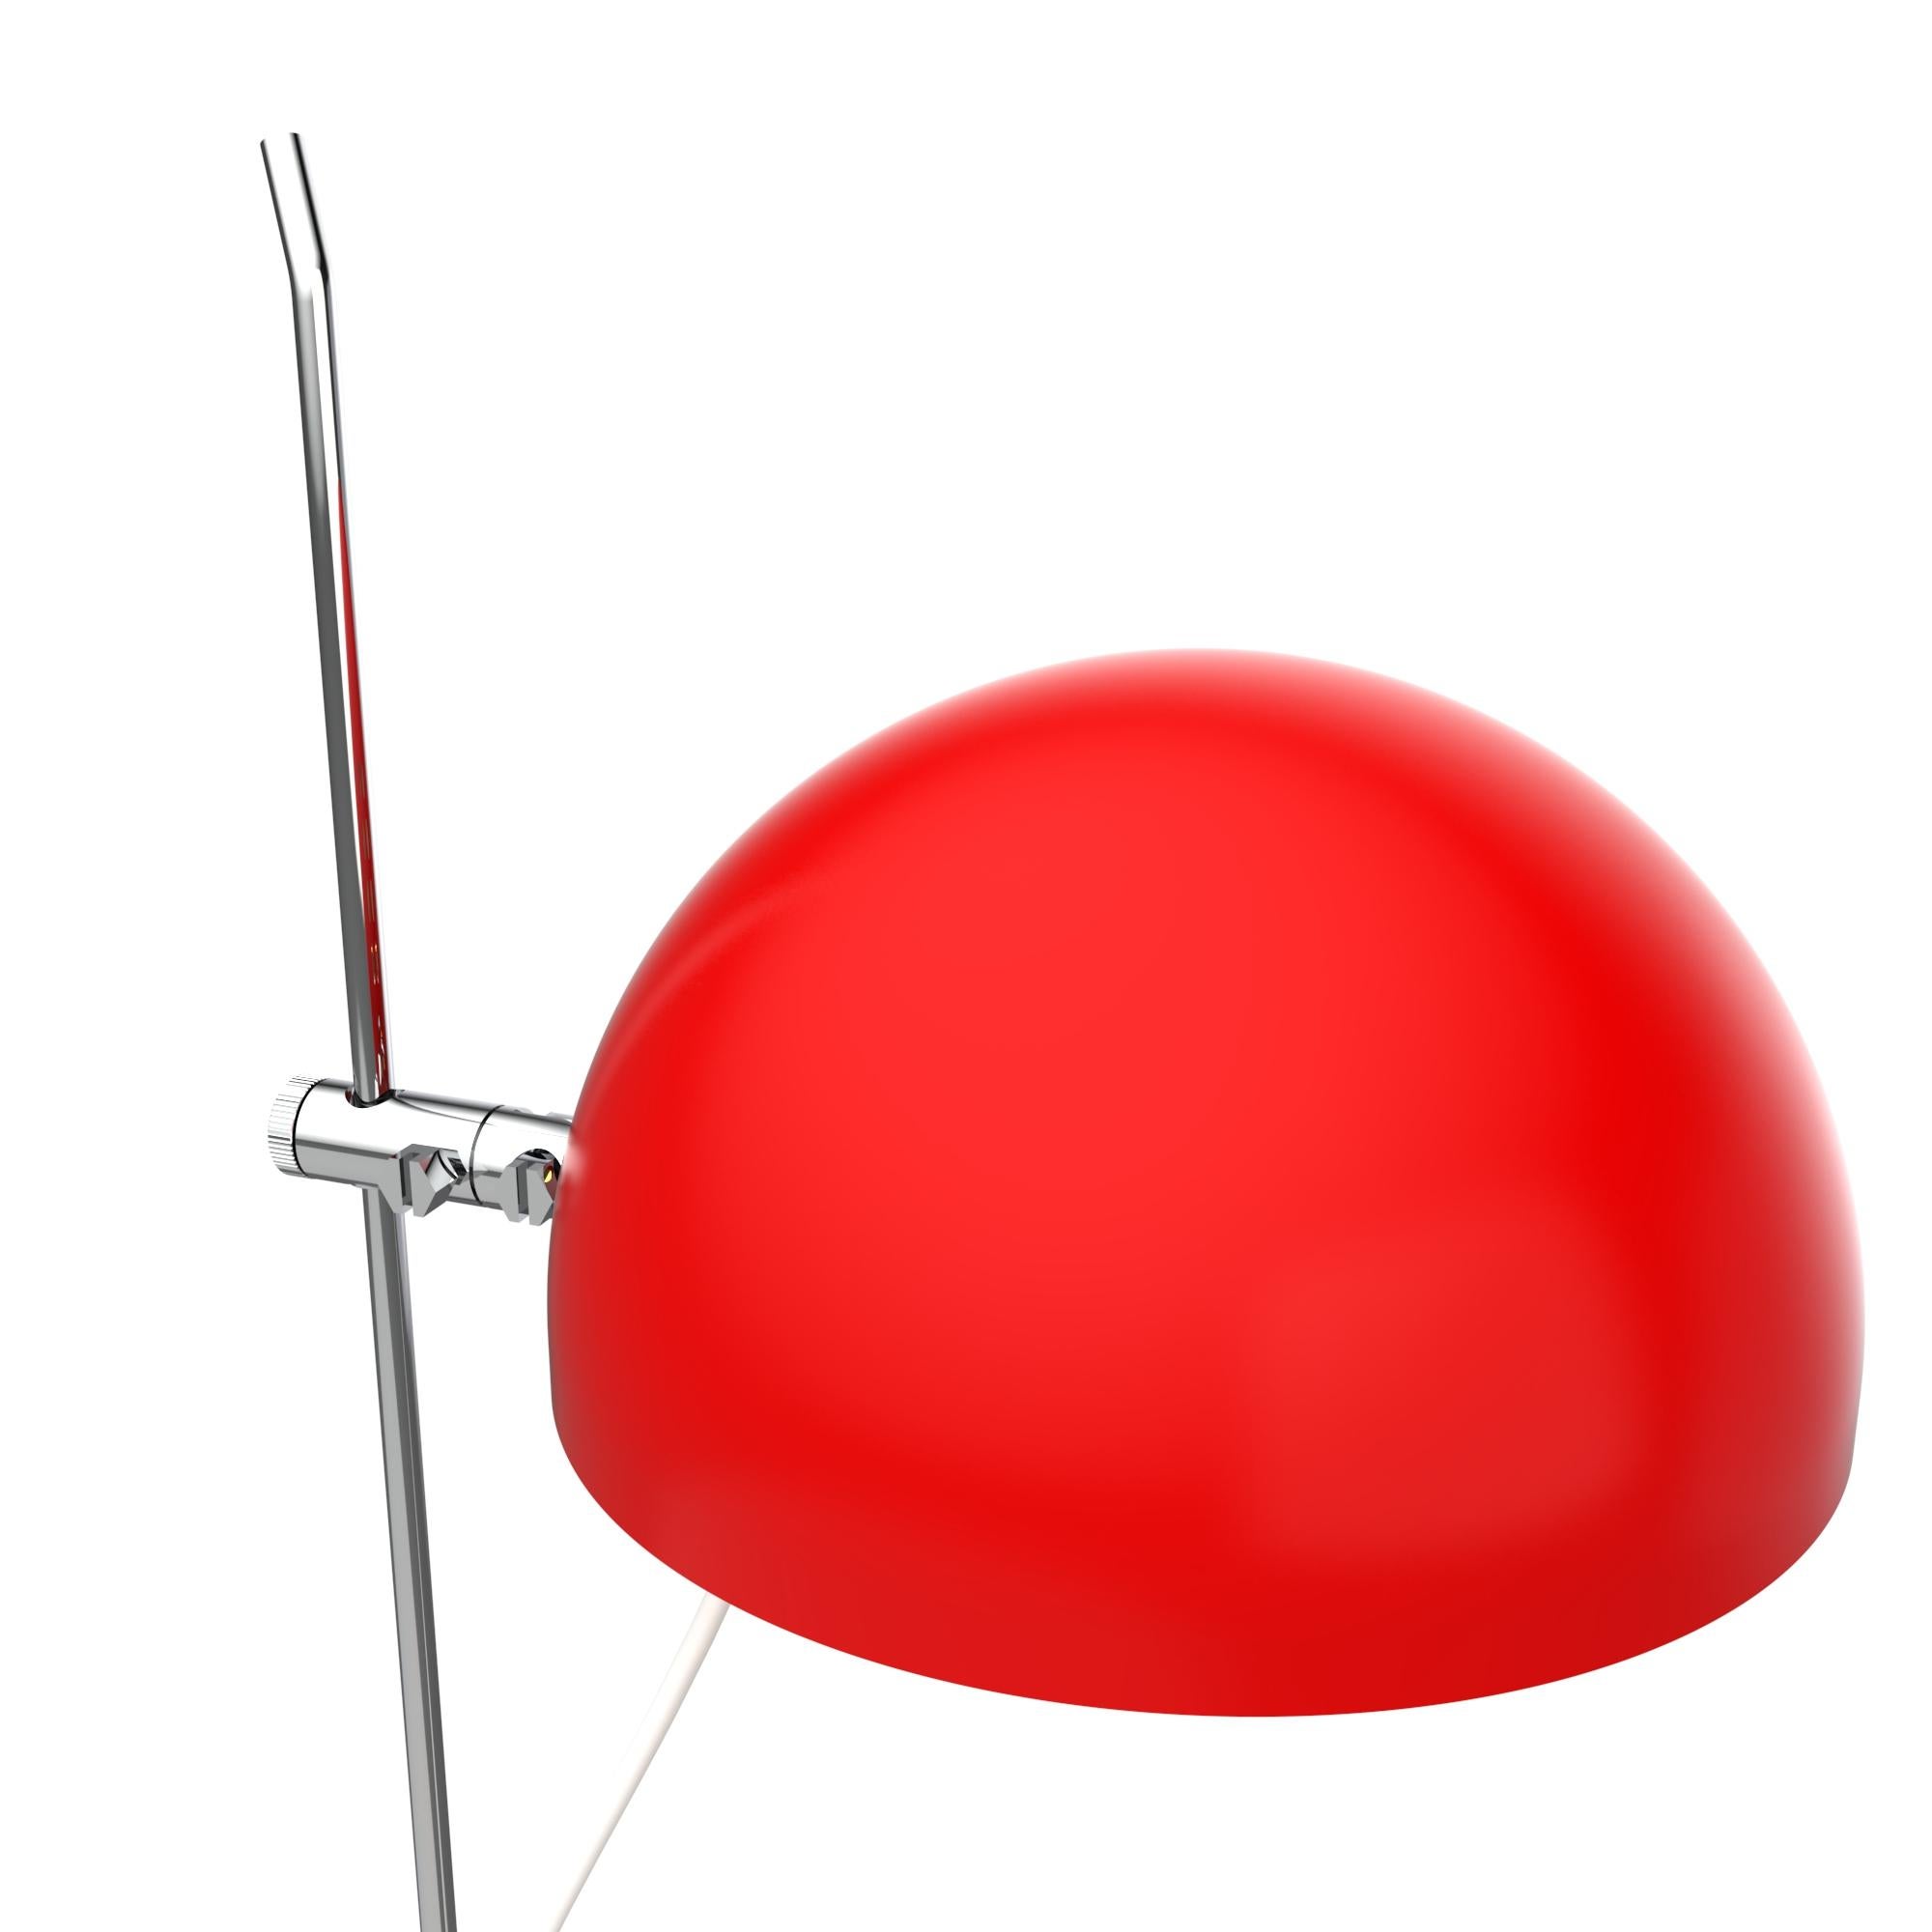 Mid-Century Modern Alain Richard 'A22F' Task Lamp in Red for Disderot For Sale